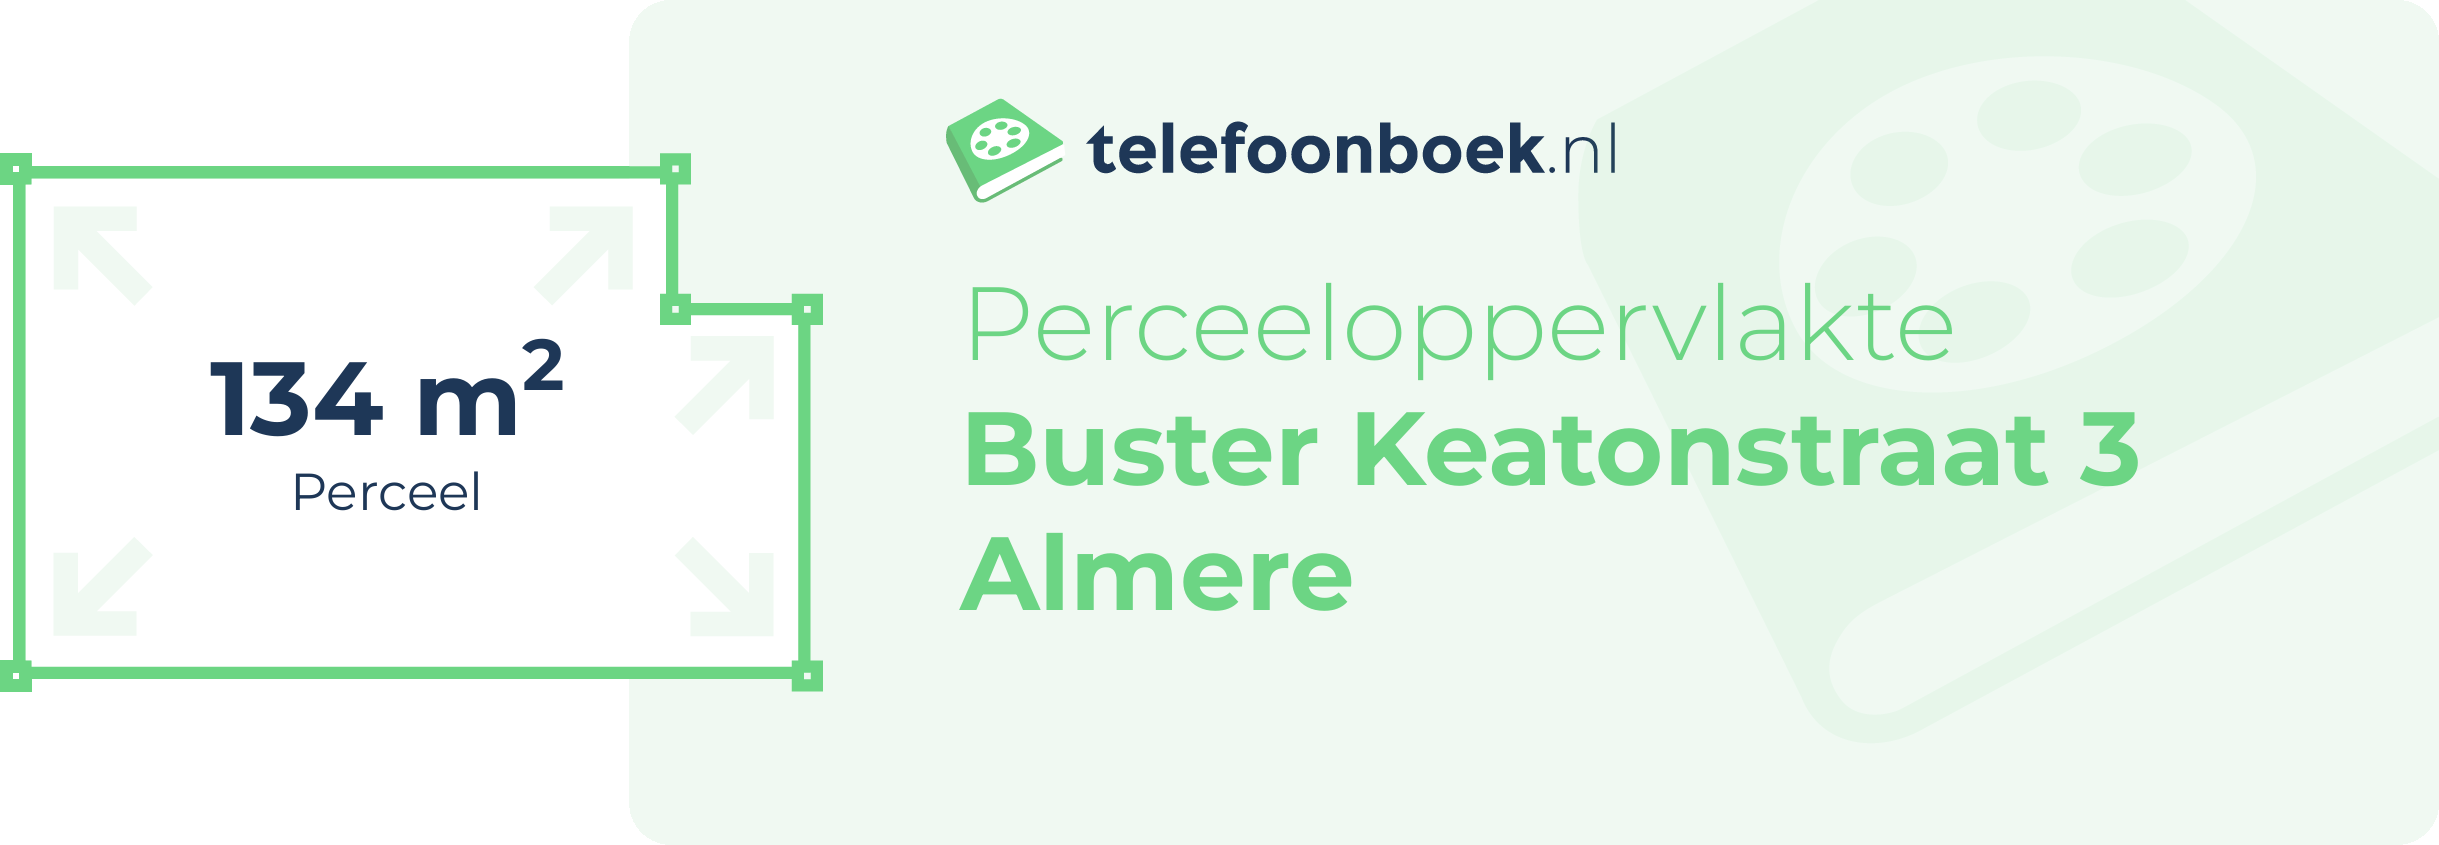 Perceeloppervlakte Buster Keatonstraat 3 Almere